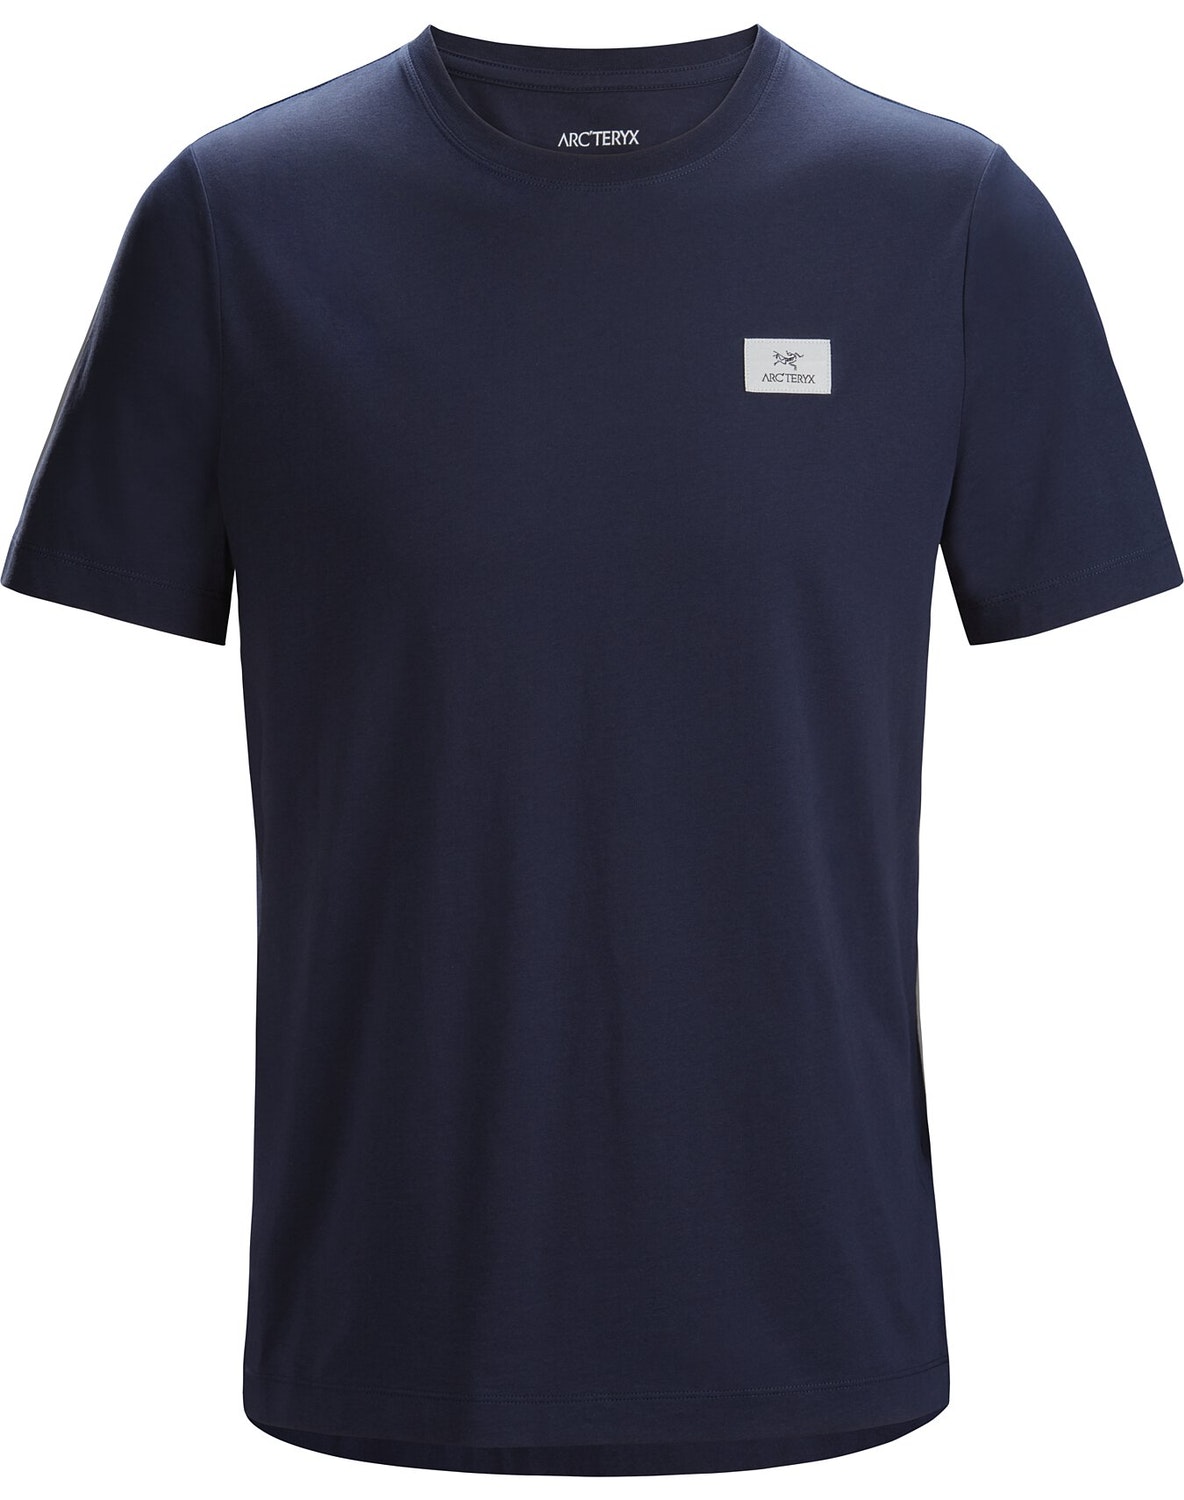 T-shirt Arc'teryx Emblem Patch Uomo Blu Marino - IT-75154973